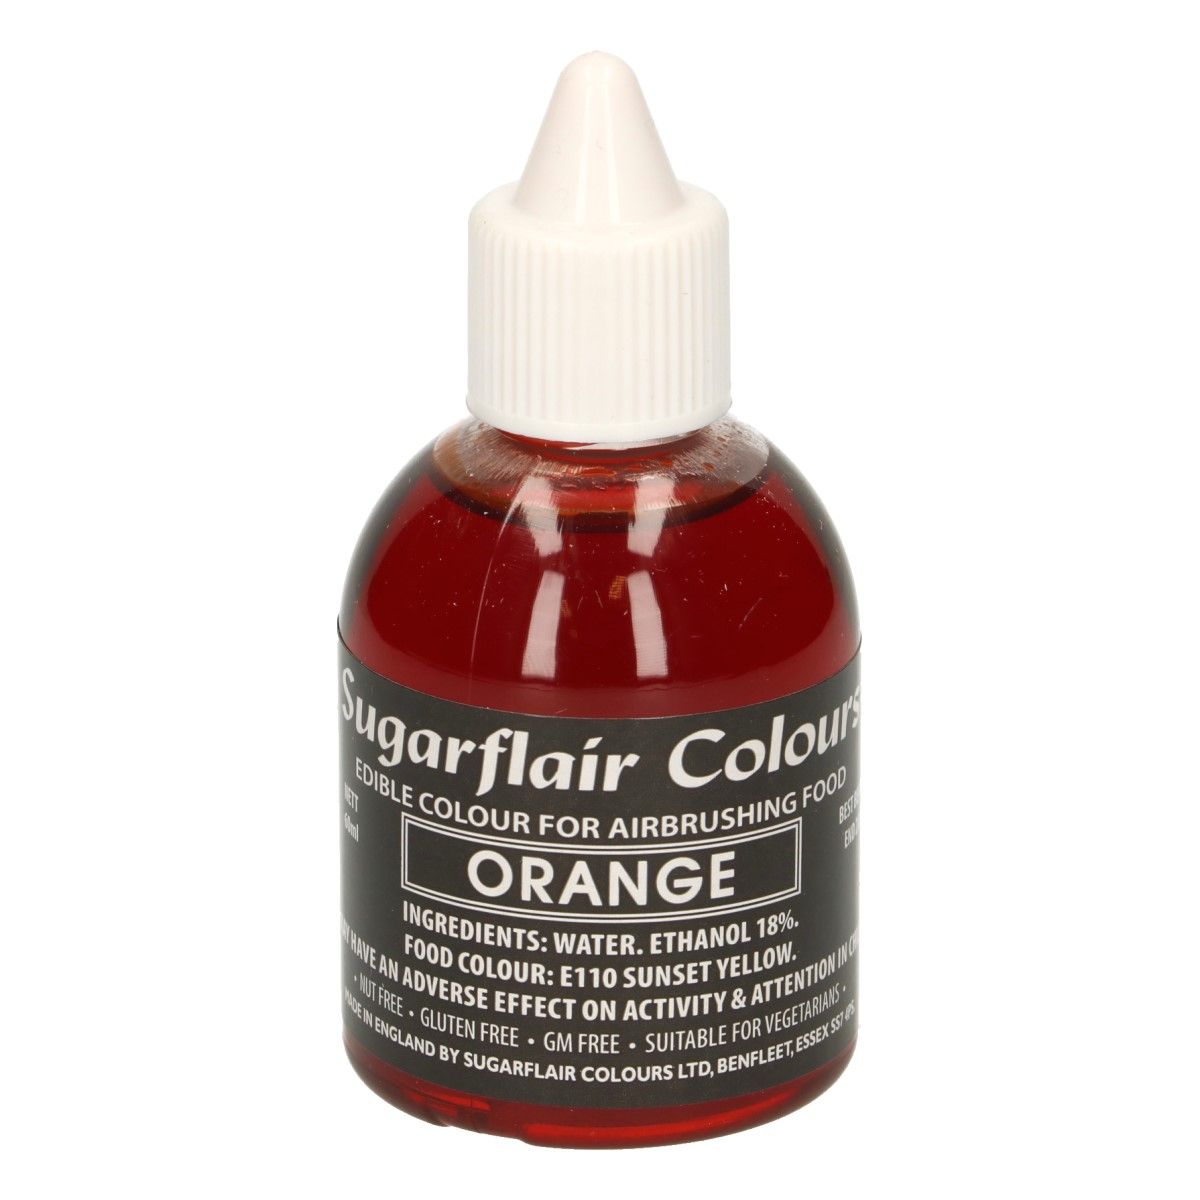 Sugarflair orange, oranžová potravinárska airbrush farba, 60ml